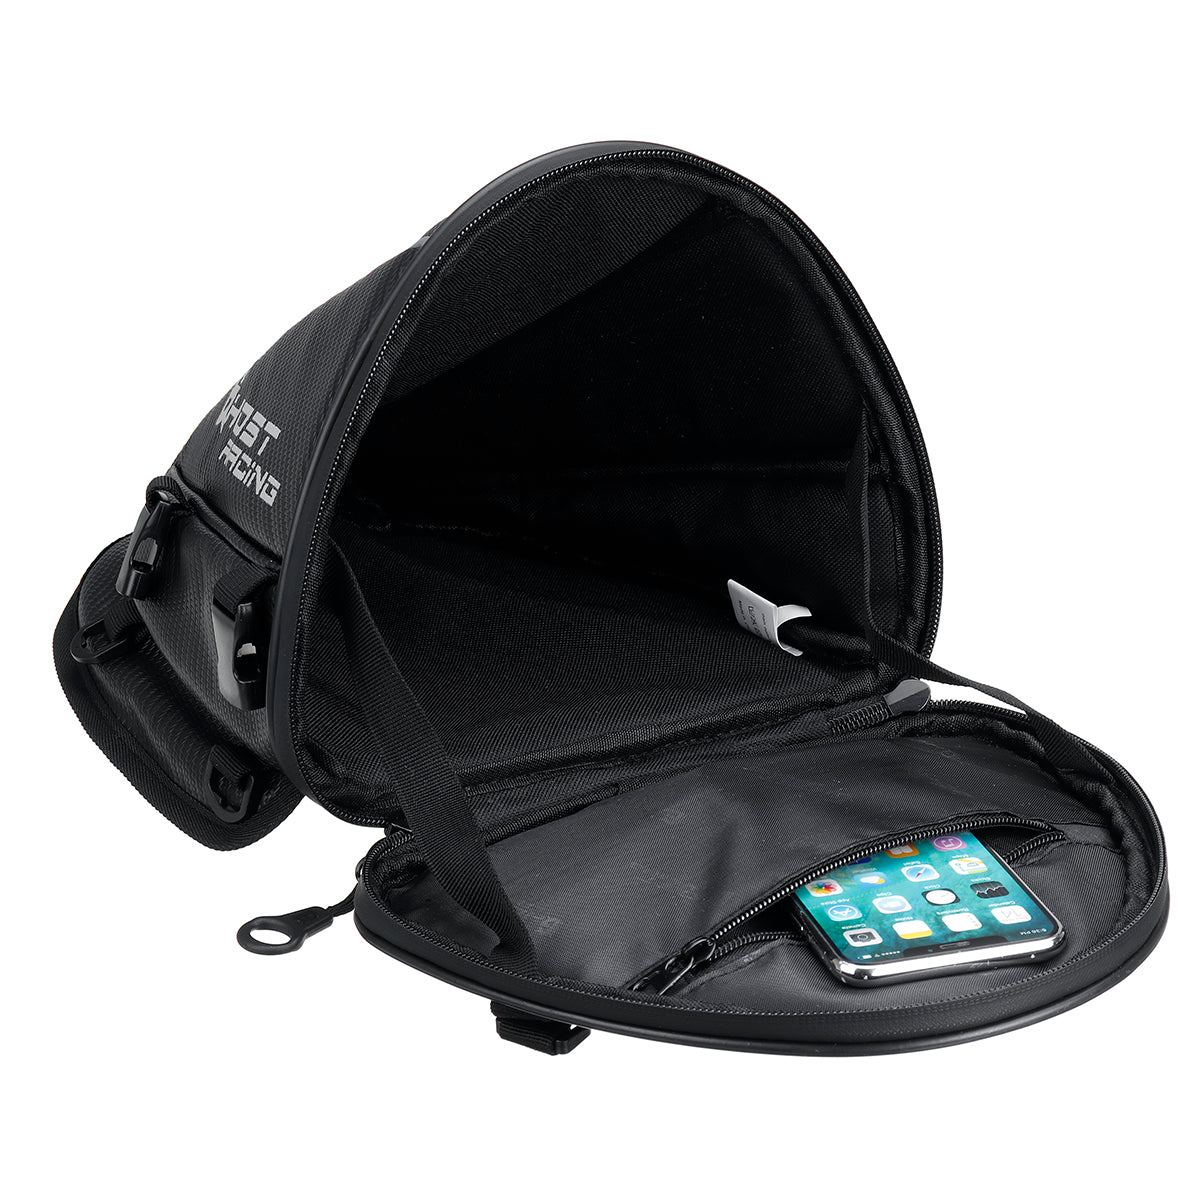 Black GHOST RACING Motorcycle Tail Bag Rear Trunk Back Seat Carry Luggage Bike Saddlebag Waterproof Tank Bag